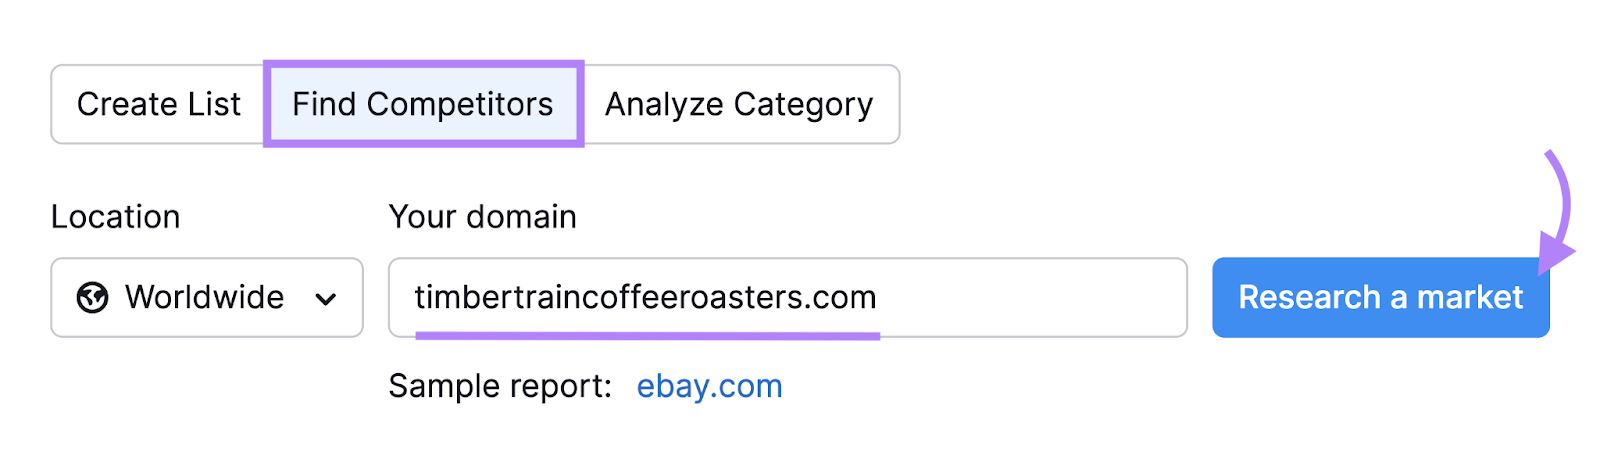 Market Explorer tool search for "timbertraincoffeeroasters.com"